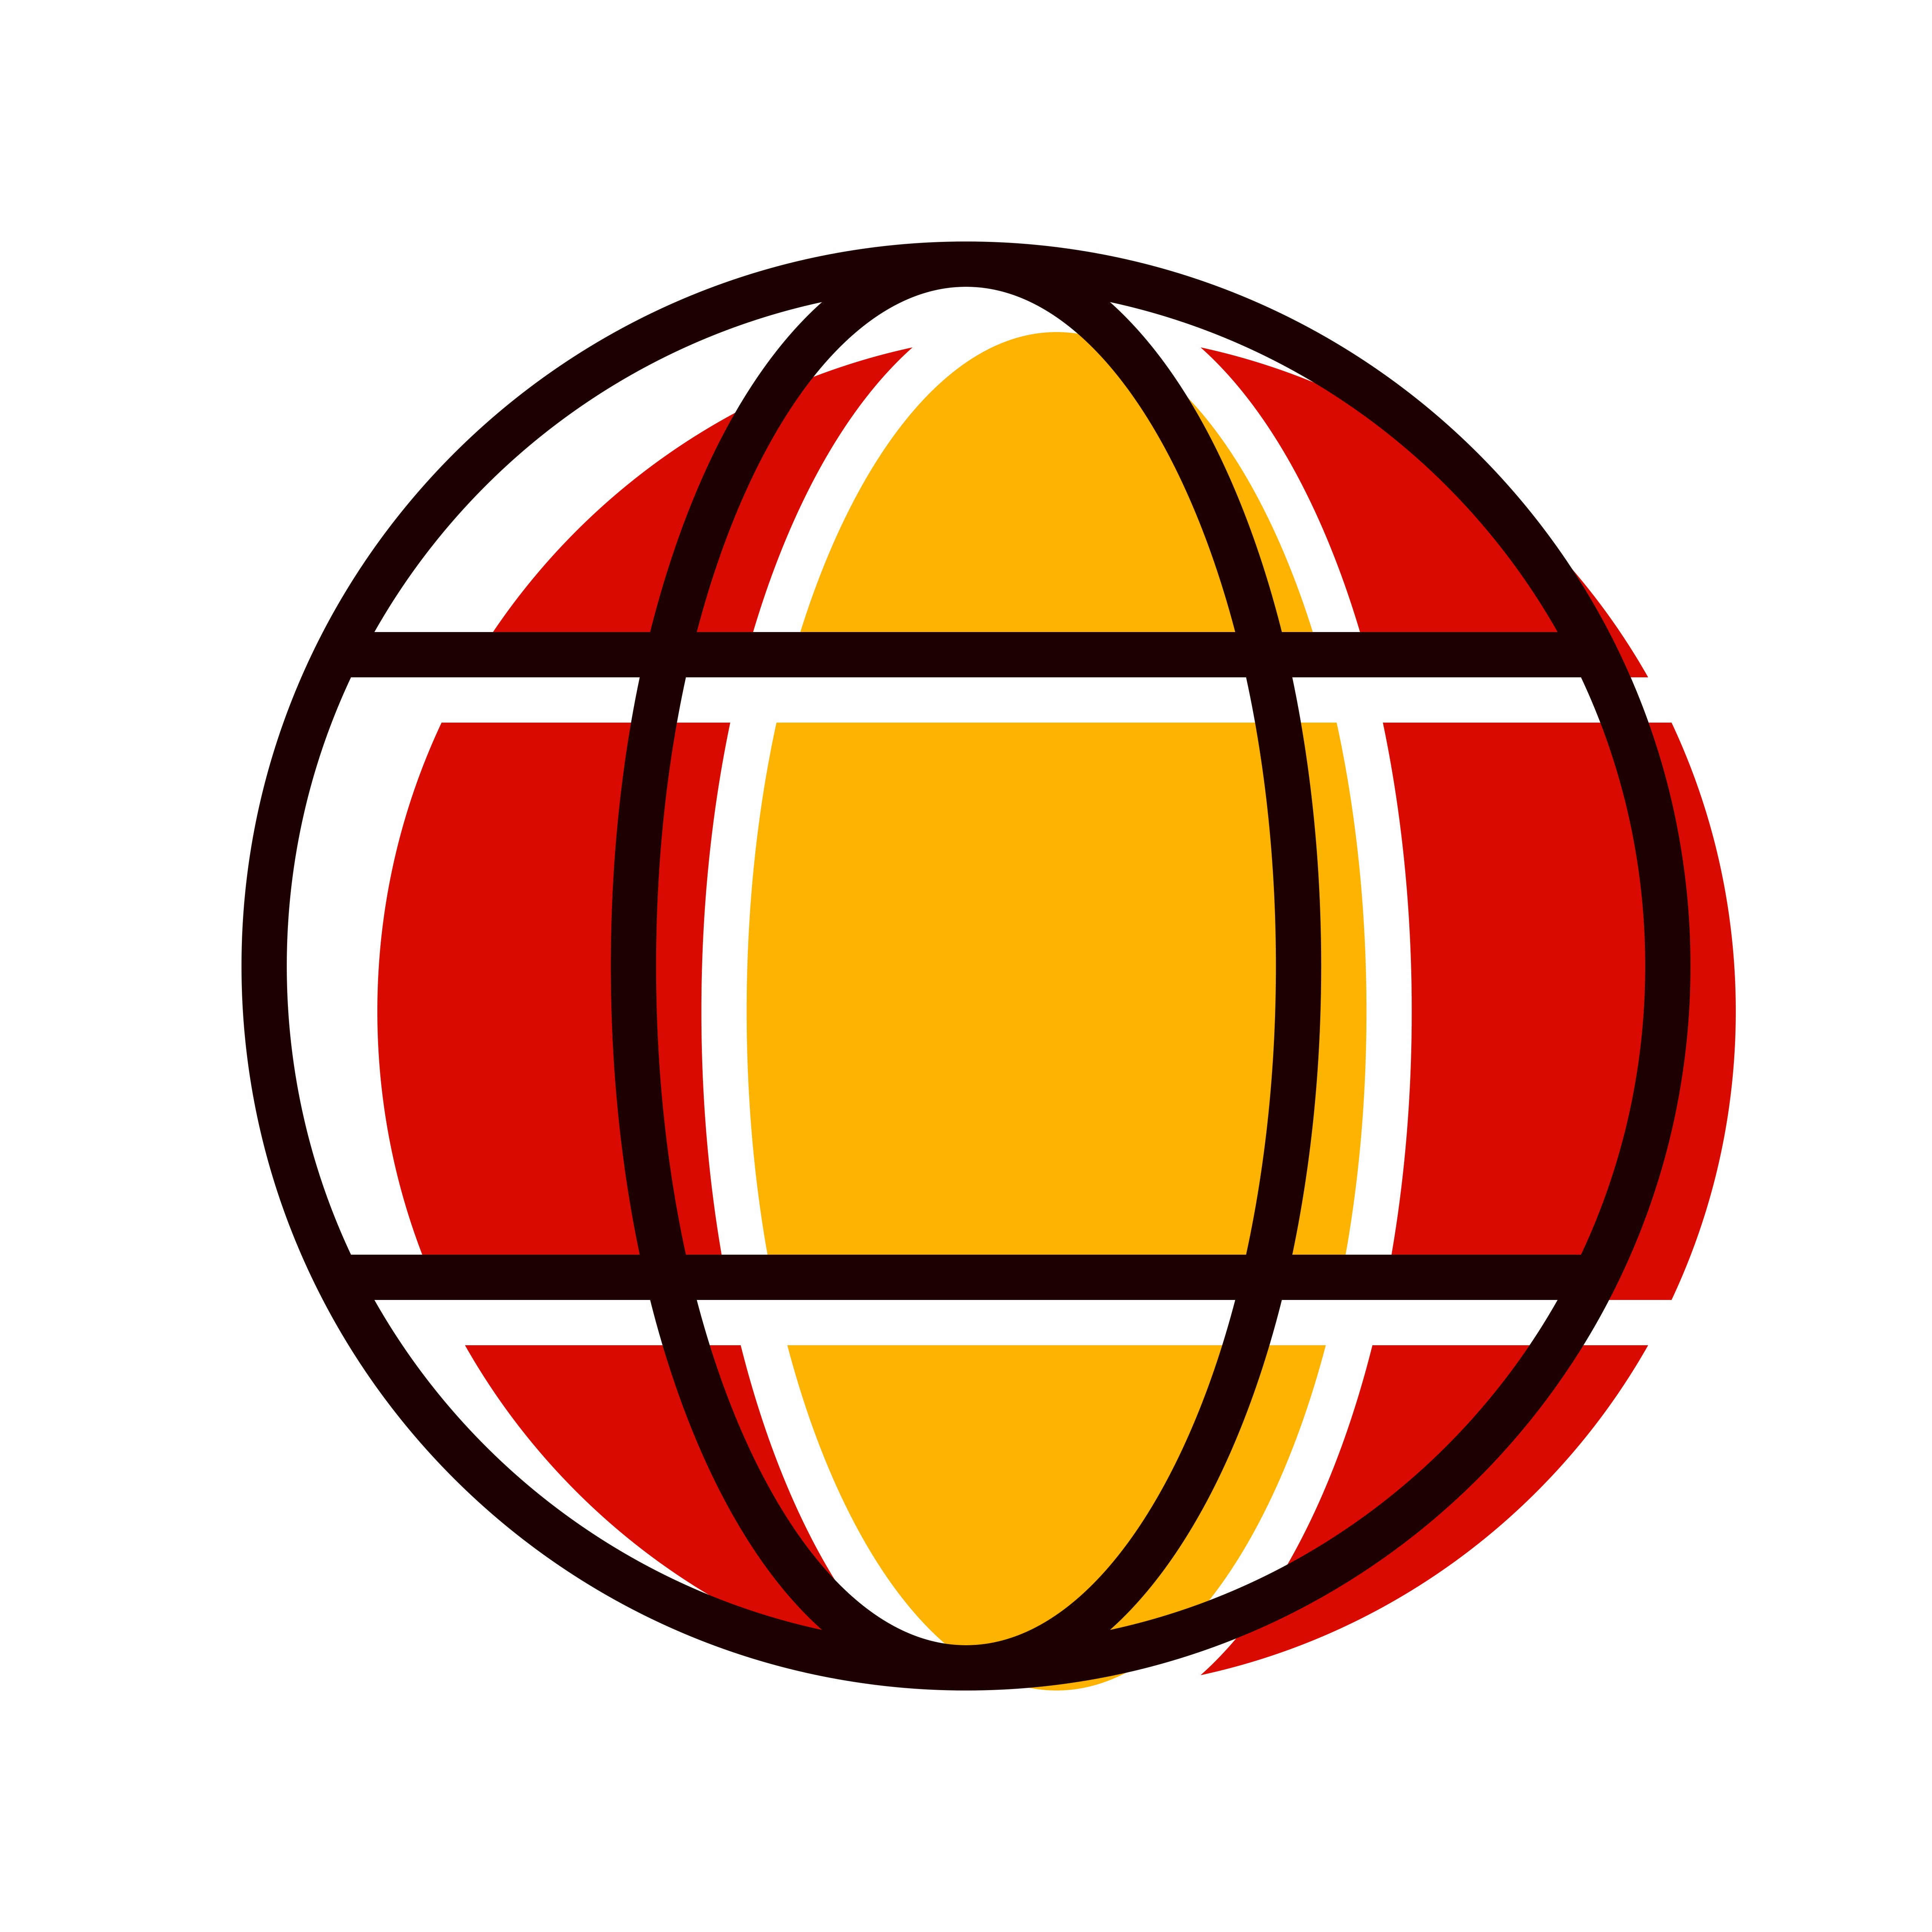 Download Globe Icon Design - Download Free Vectors, Clipart Graphics & Vector Art